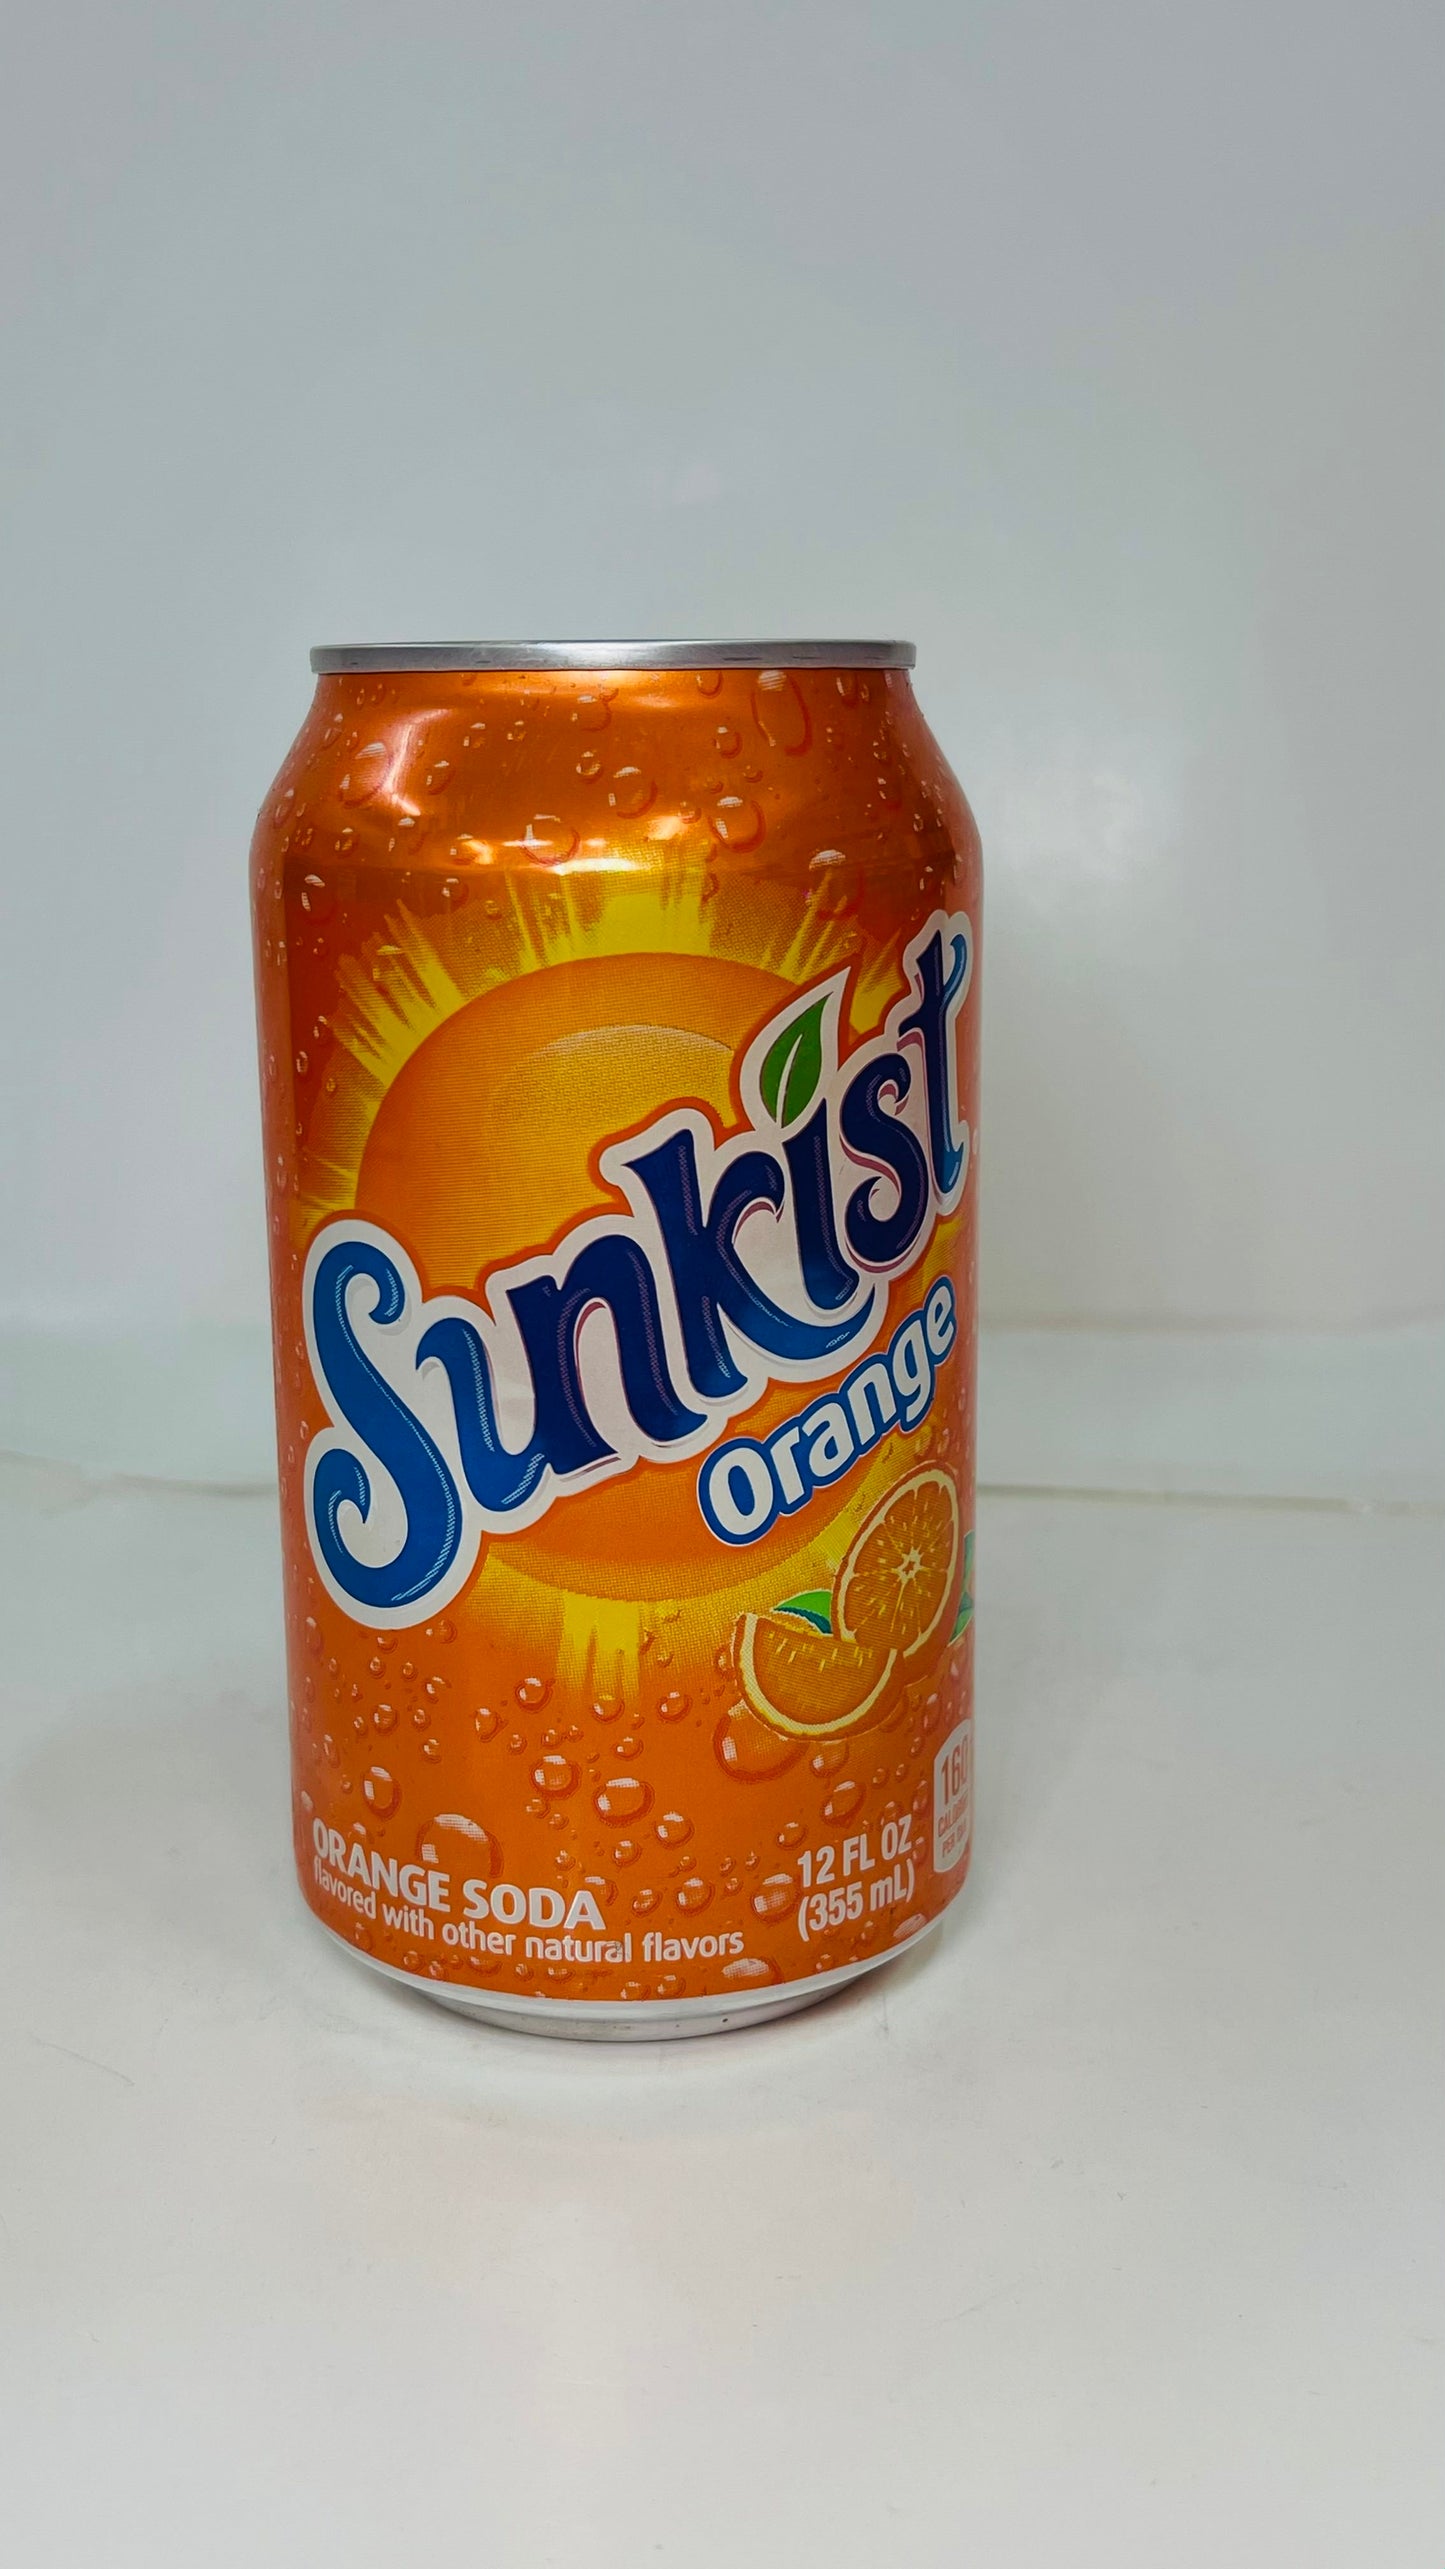 Sunkist Orange Soda